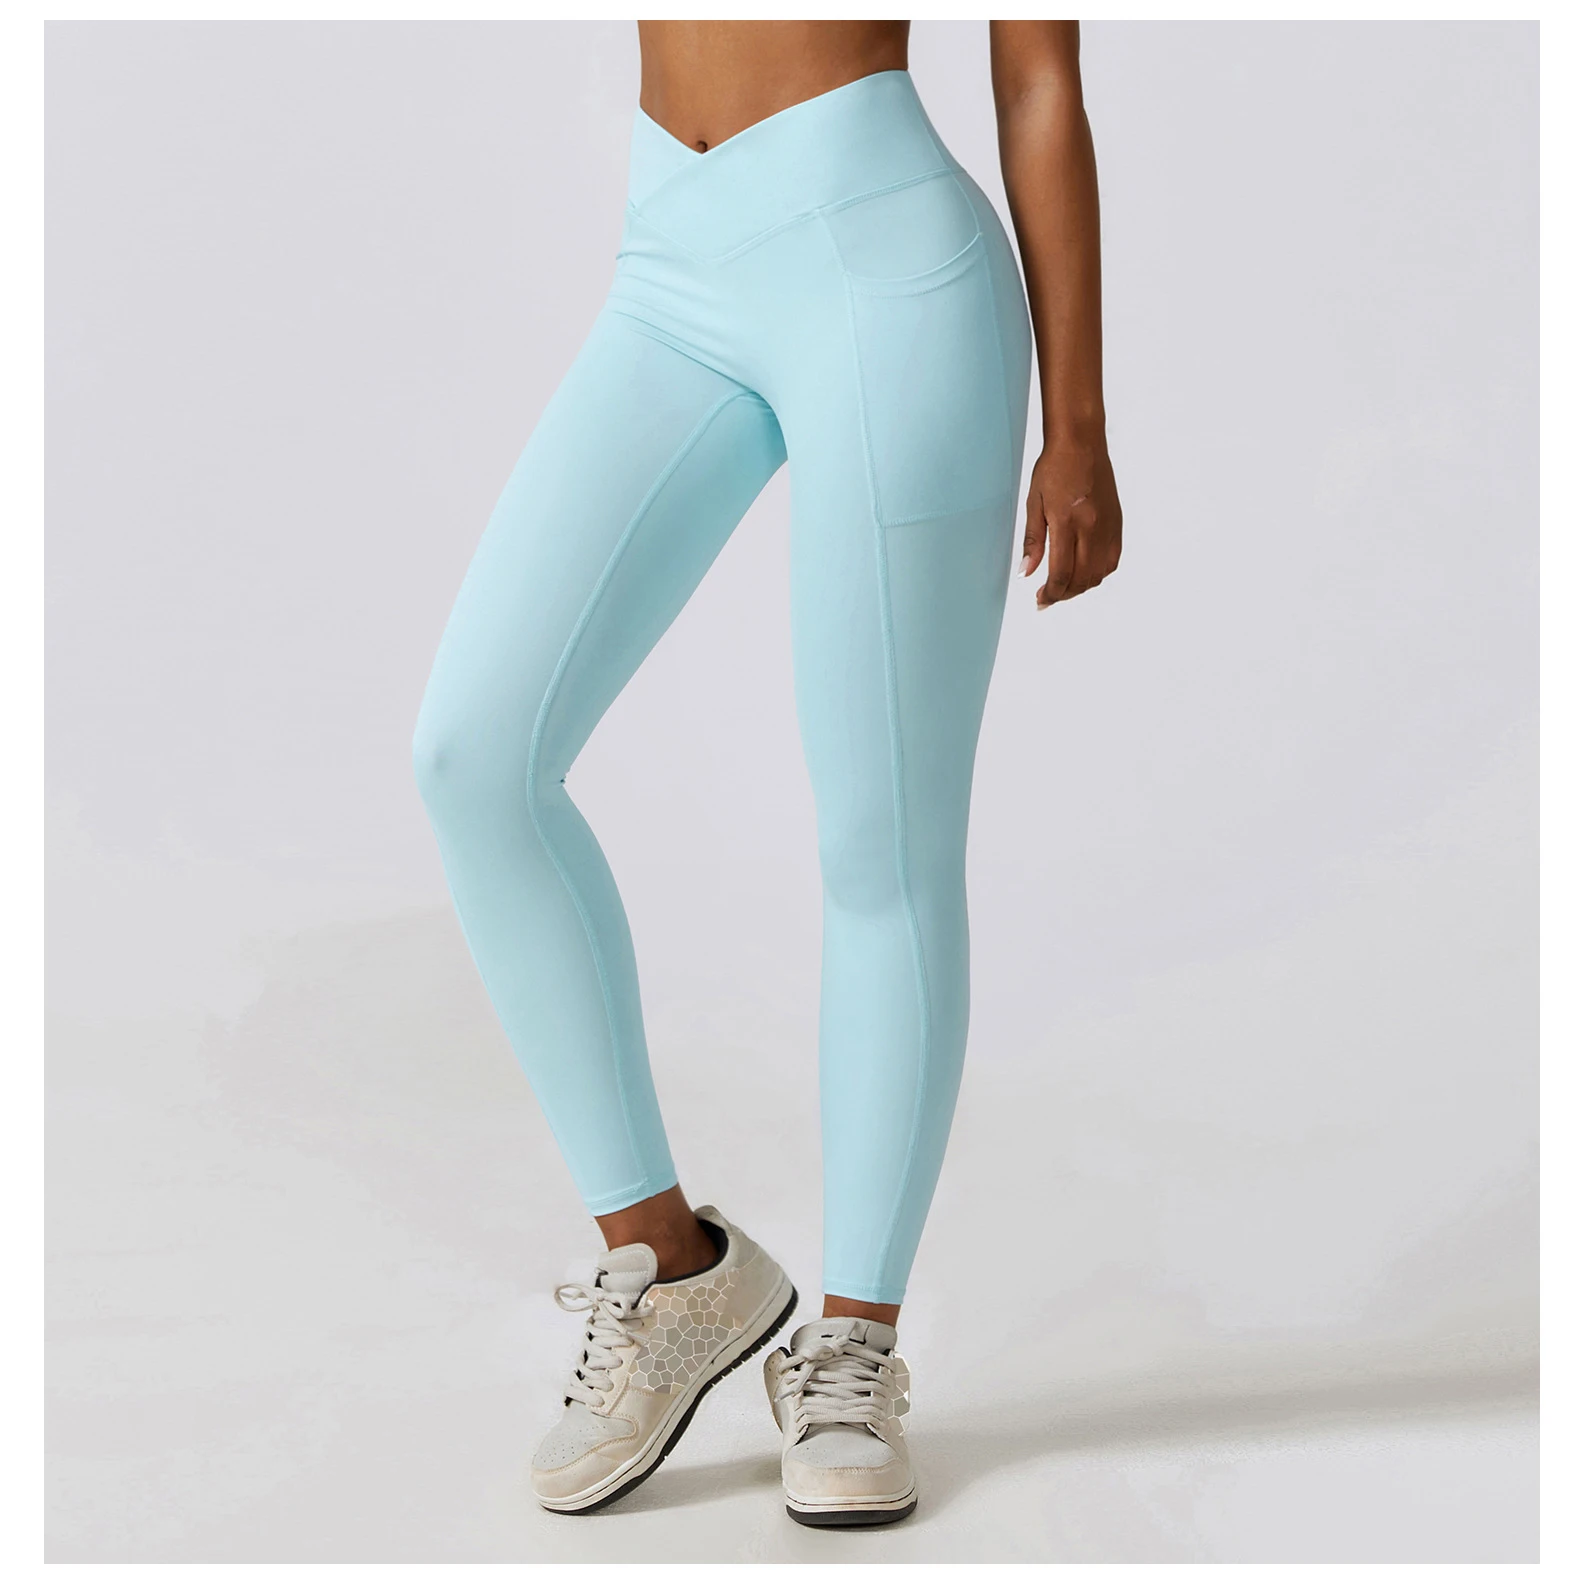 Women High Waist Sport Leggings Slim Fit Pocket Sweatpants Outdoor Running Push Up Fitness Pants Gym Yoga Pants